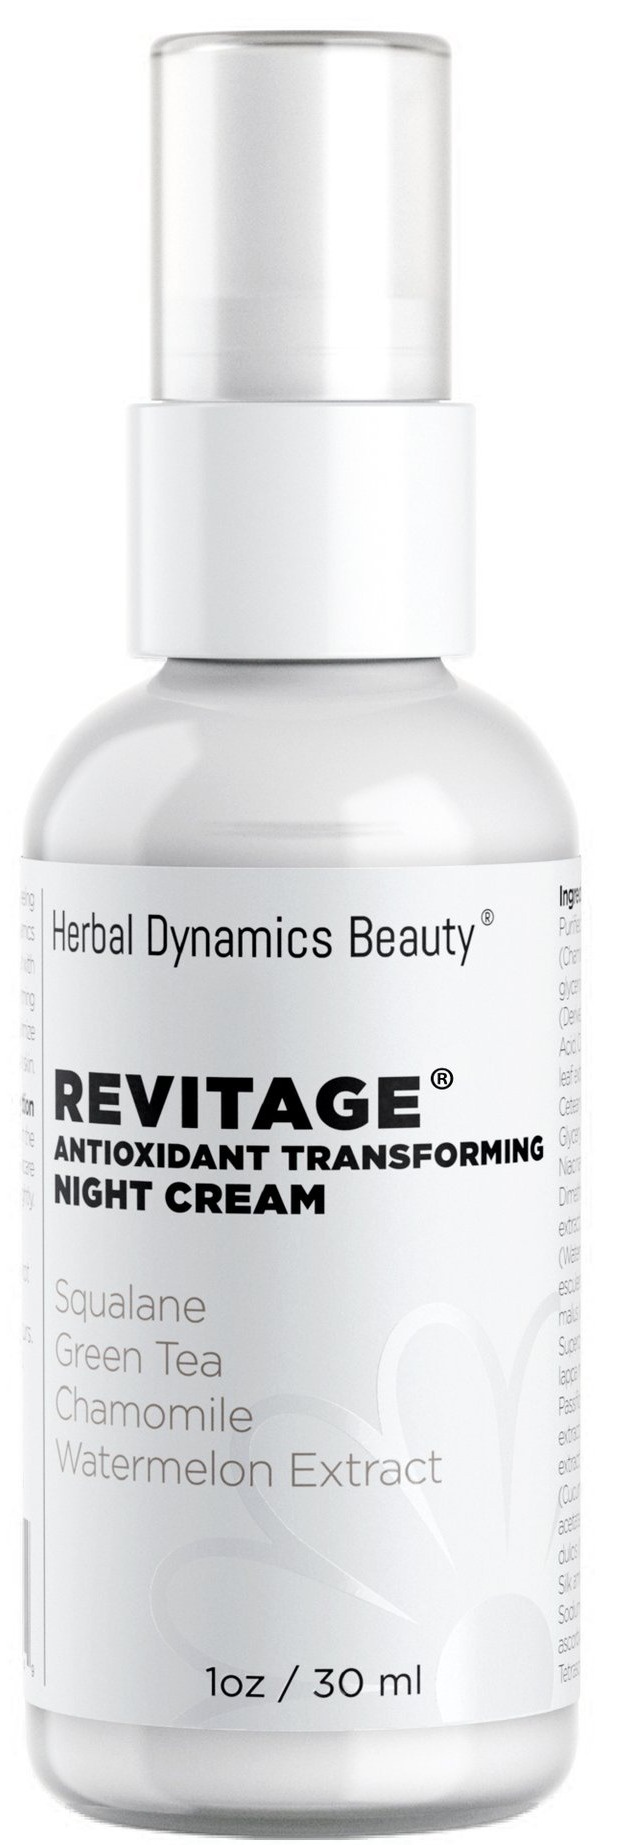 Herbal Dynamics Beauty Revitage Antioxidant Transforming Night Cream